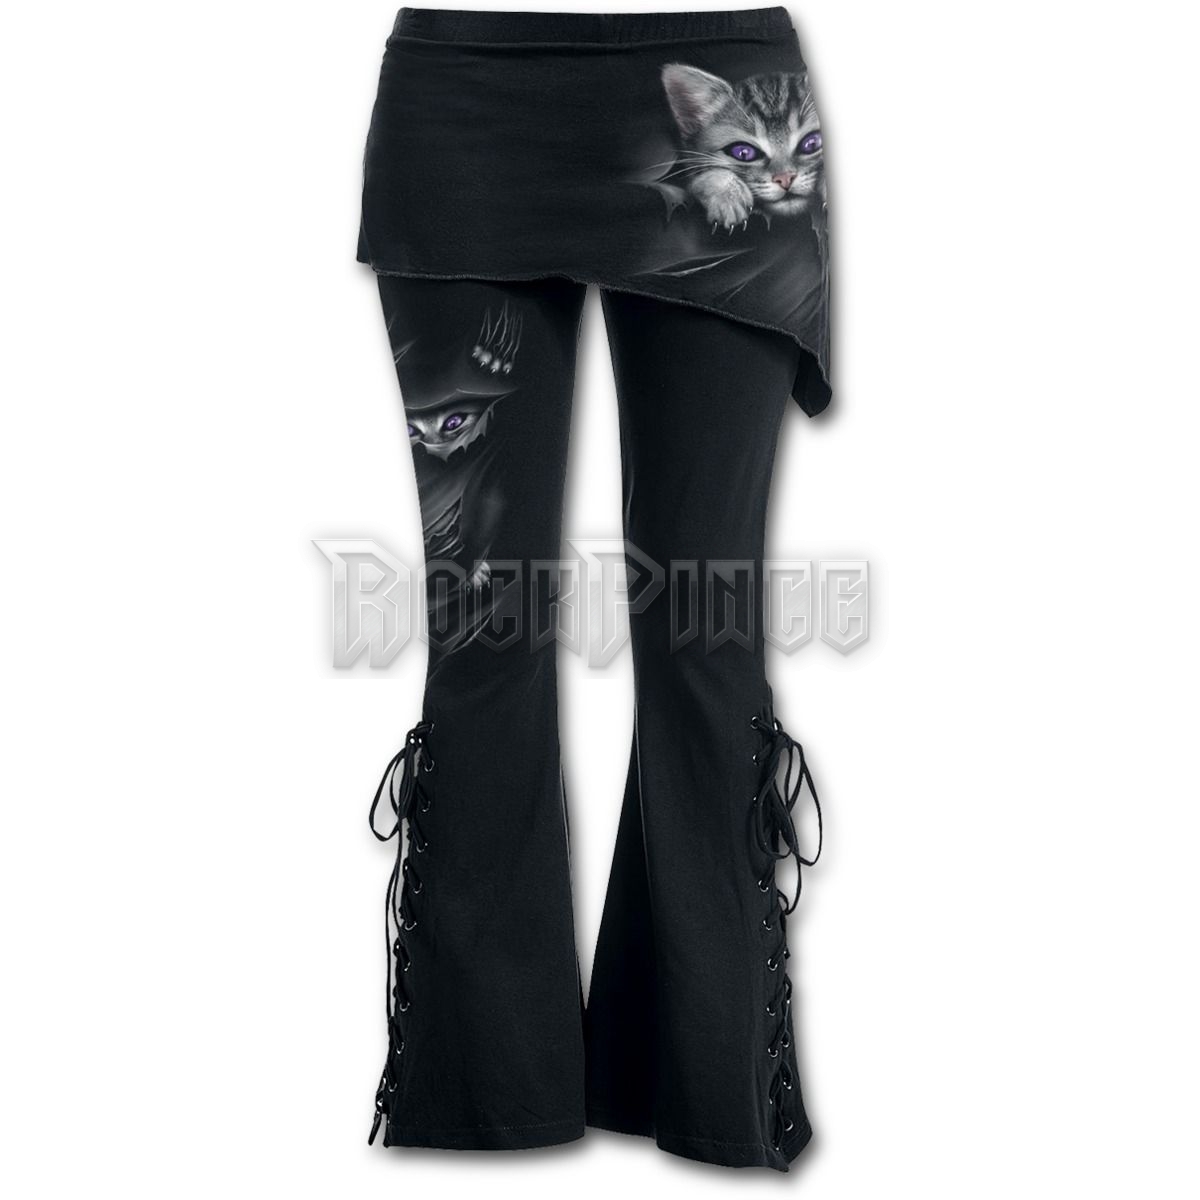 BRIGHT EYES - 2in1 Boot-Cut Leggings with Micro Slant Skirt (Plain) - F011G459